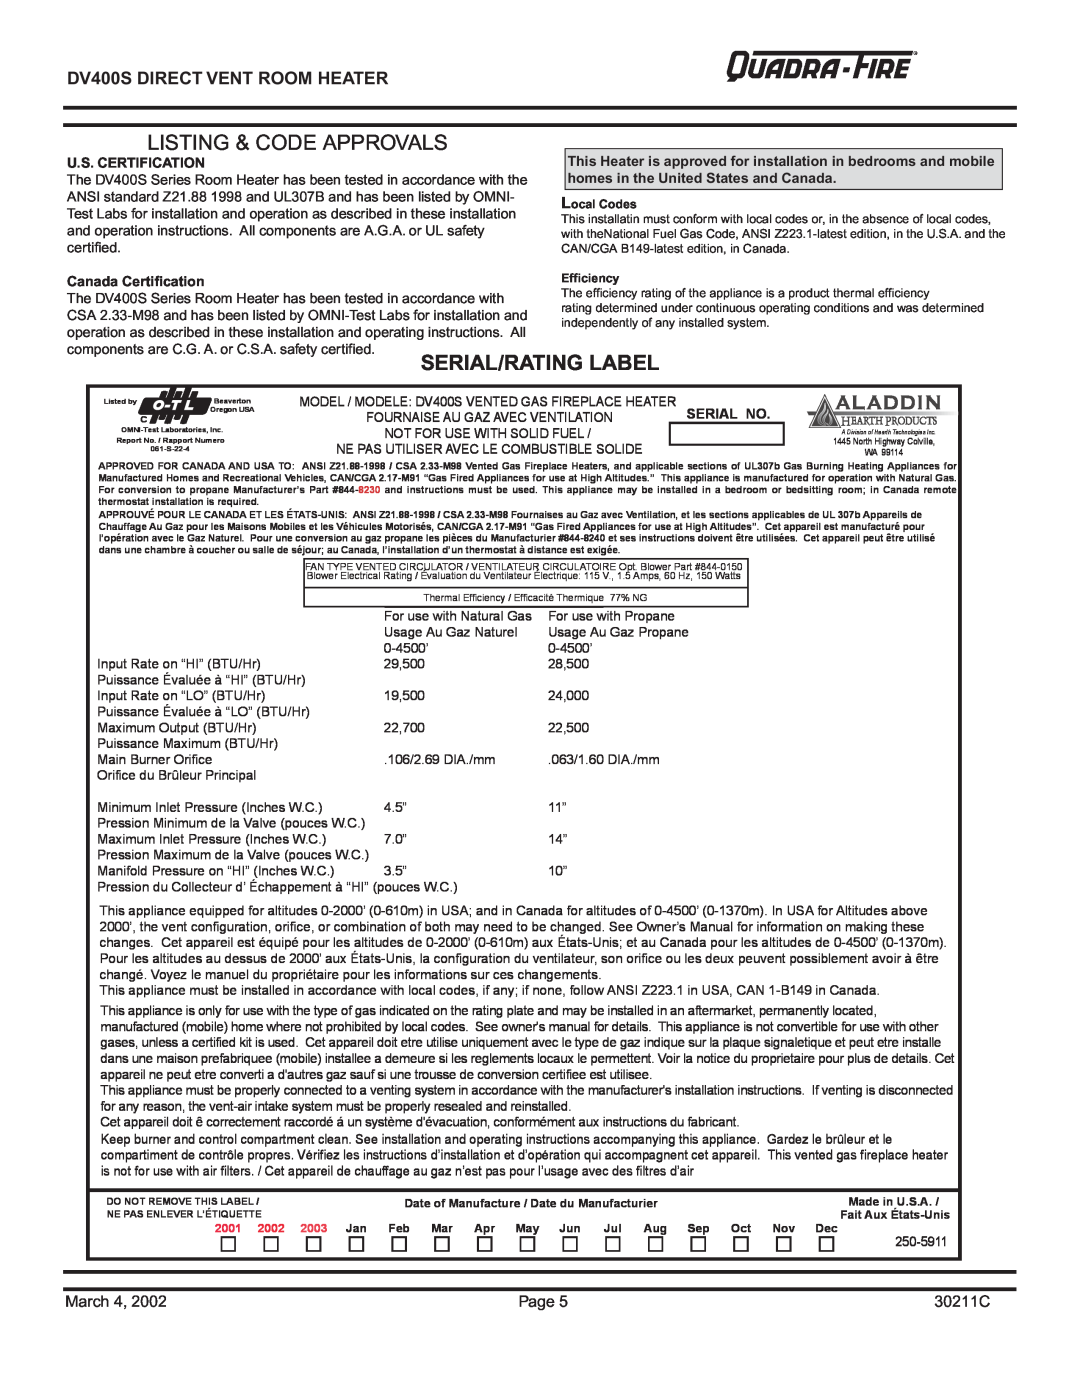 Quadra-Fire Serial/Rating Label, DV400S DIRECT VENT ROOM HEATER, U.S. Certification, Canada Certification, Serial No 